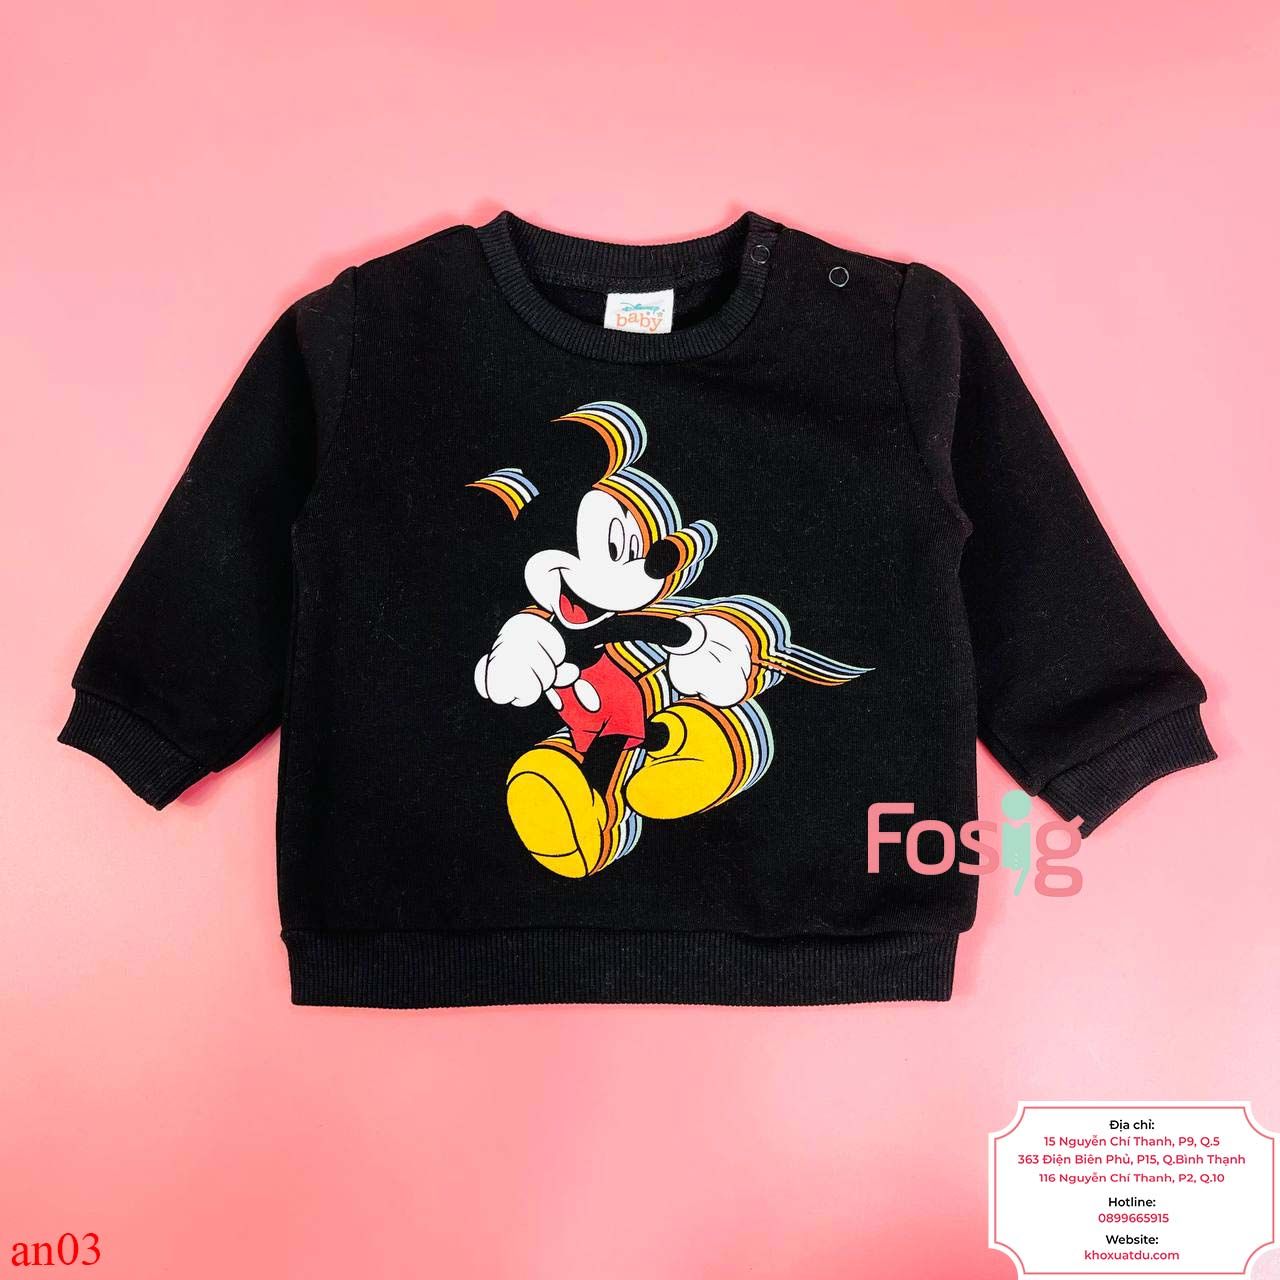  [9-10kg] Áo Nỉ Tay Dài Fox Bé Unisex - Đen Mickey 